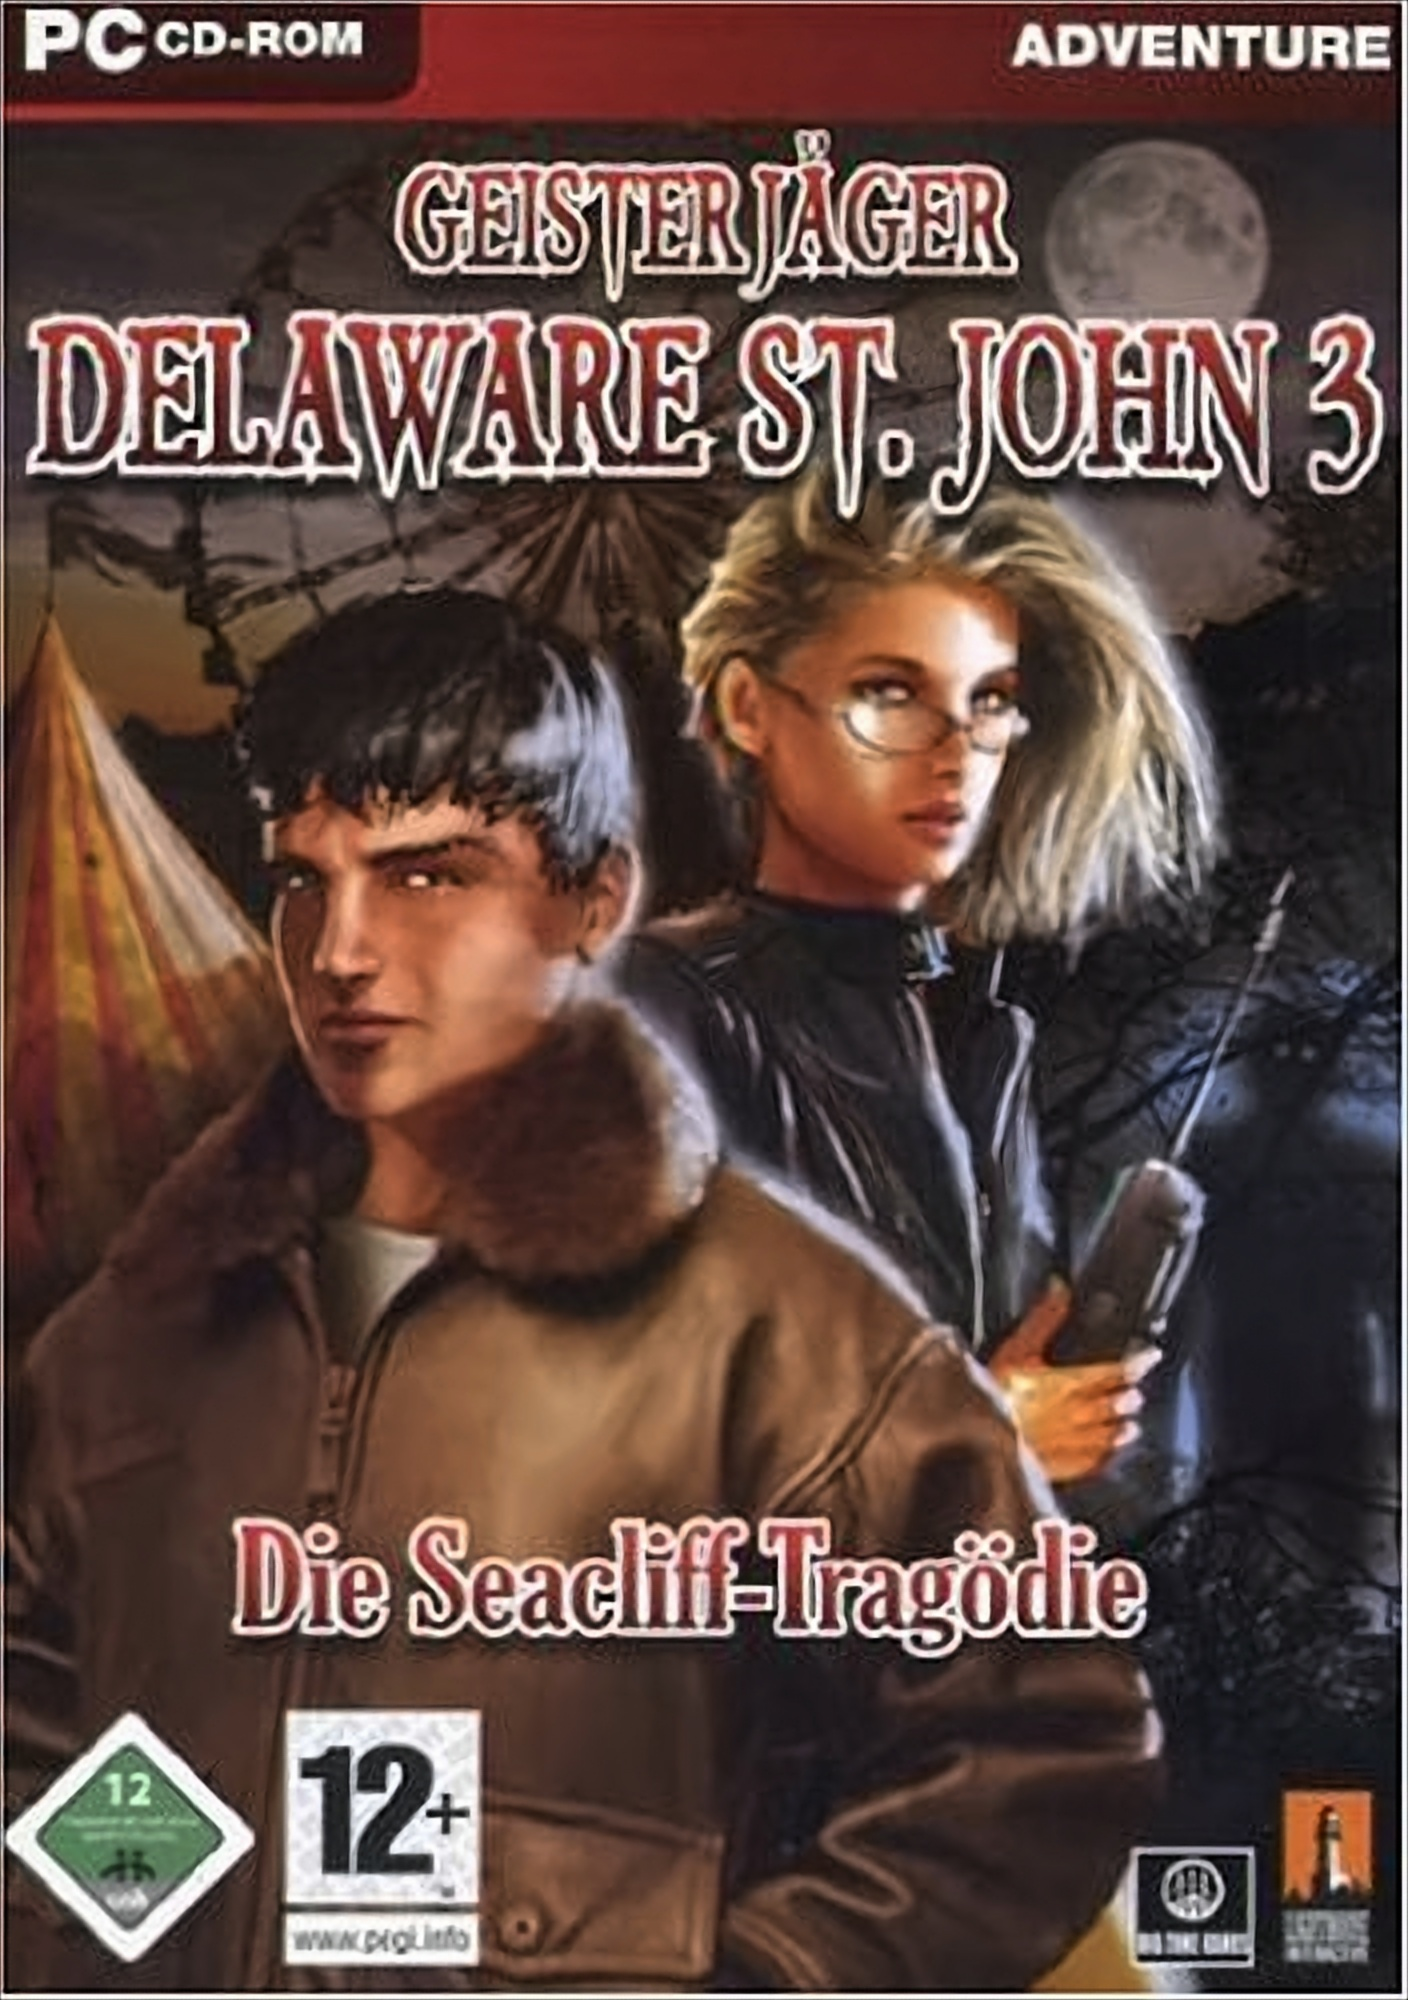 Tragödie John - Die 3 Vol. [PC] Seacliff St. Geisterjäger - Delaware